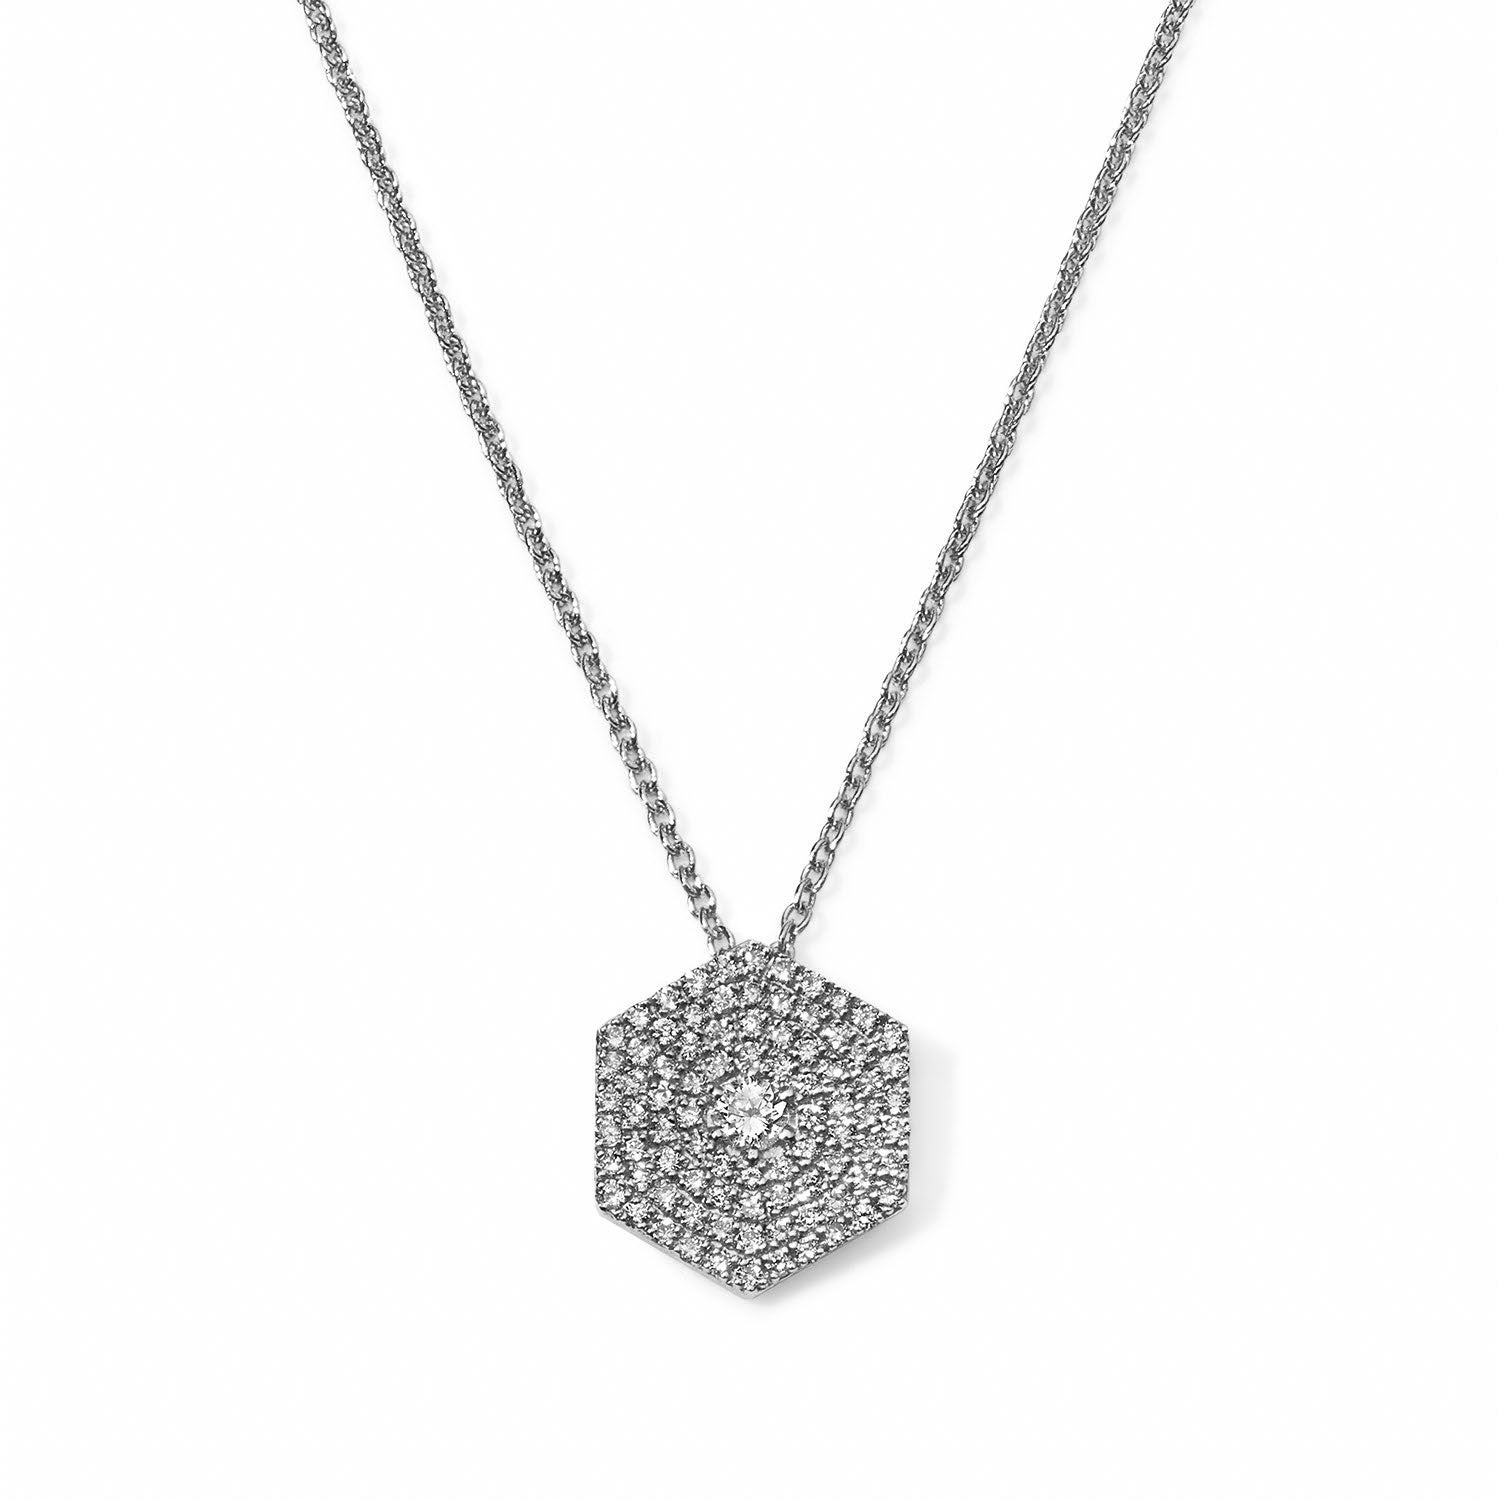 Heartfelt Gold and Diamond Hexagon Necklace